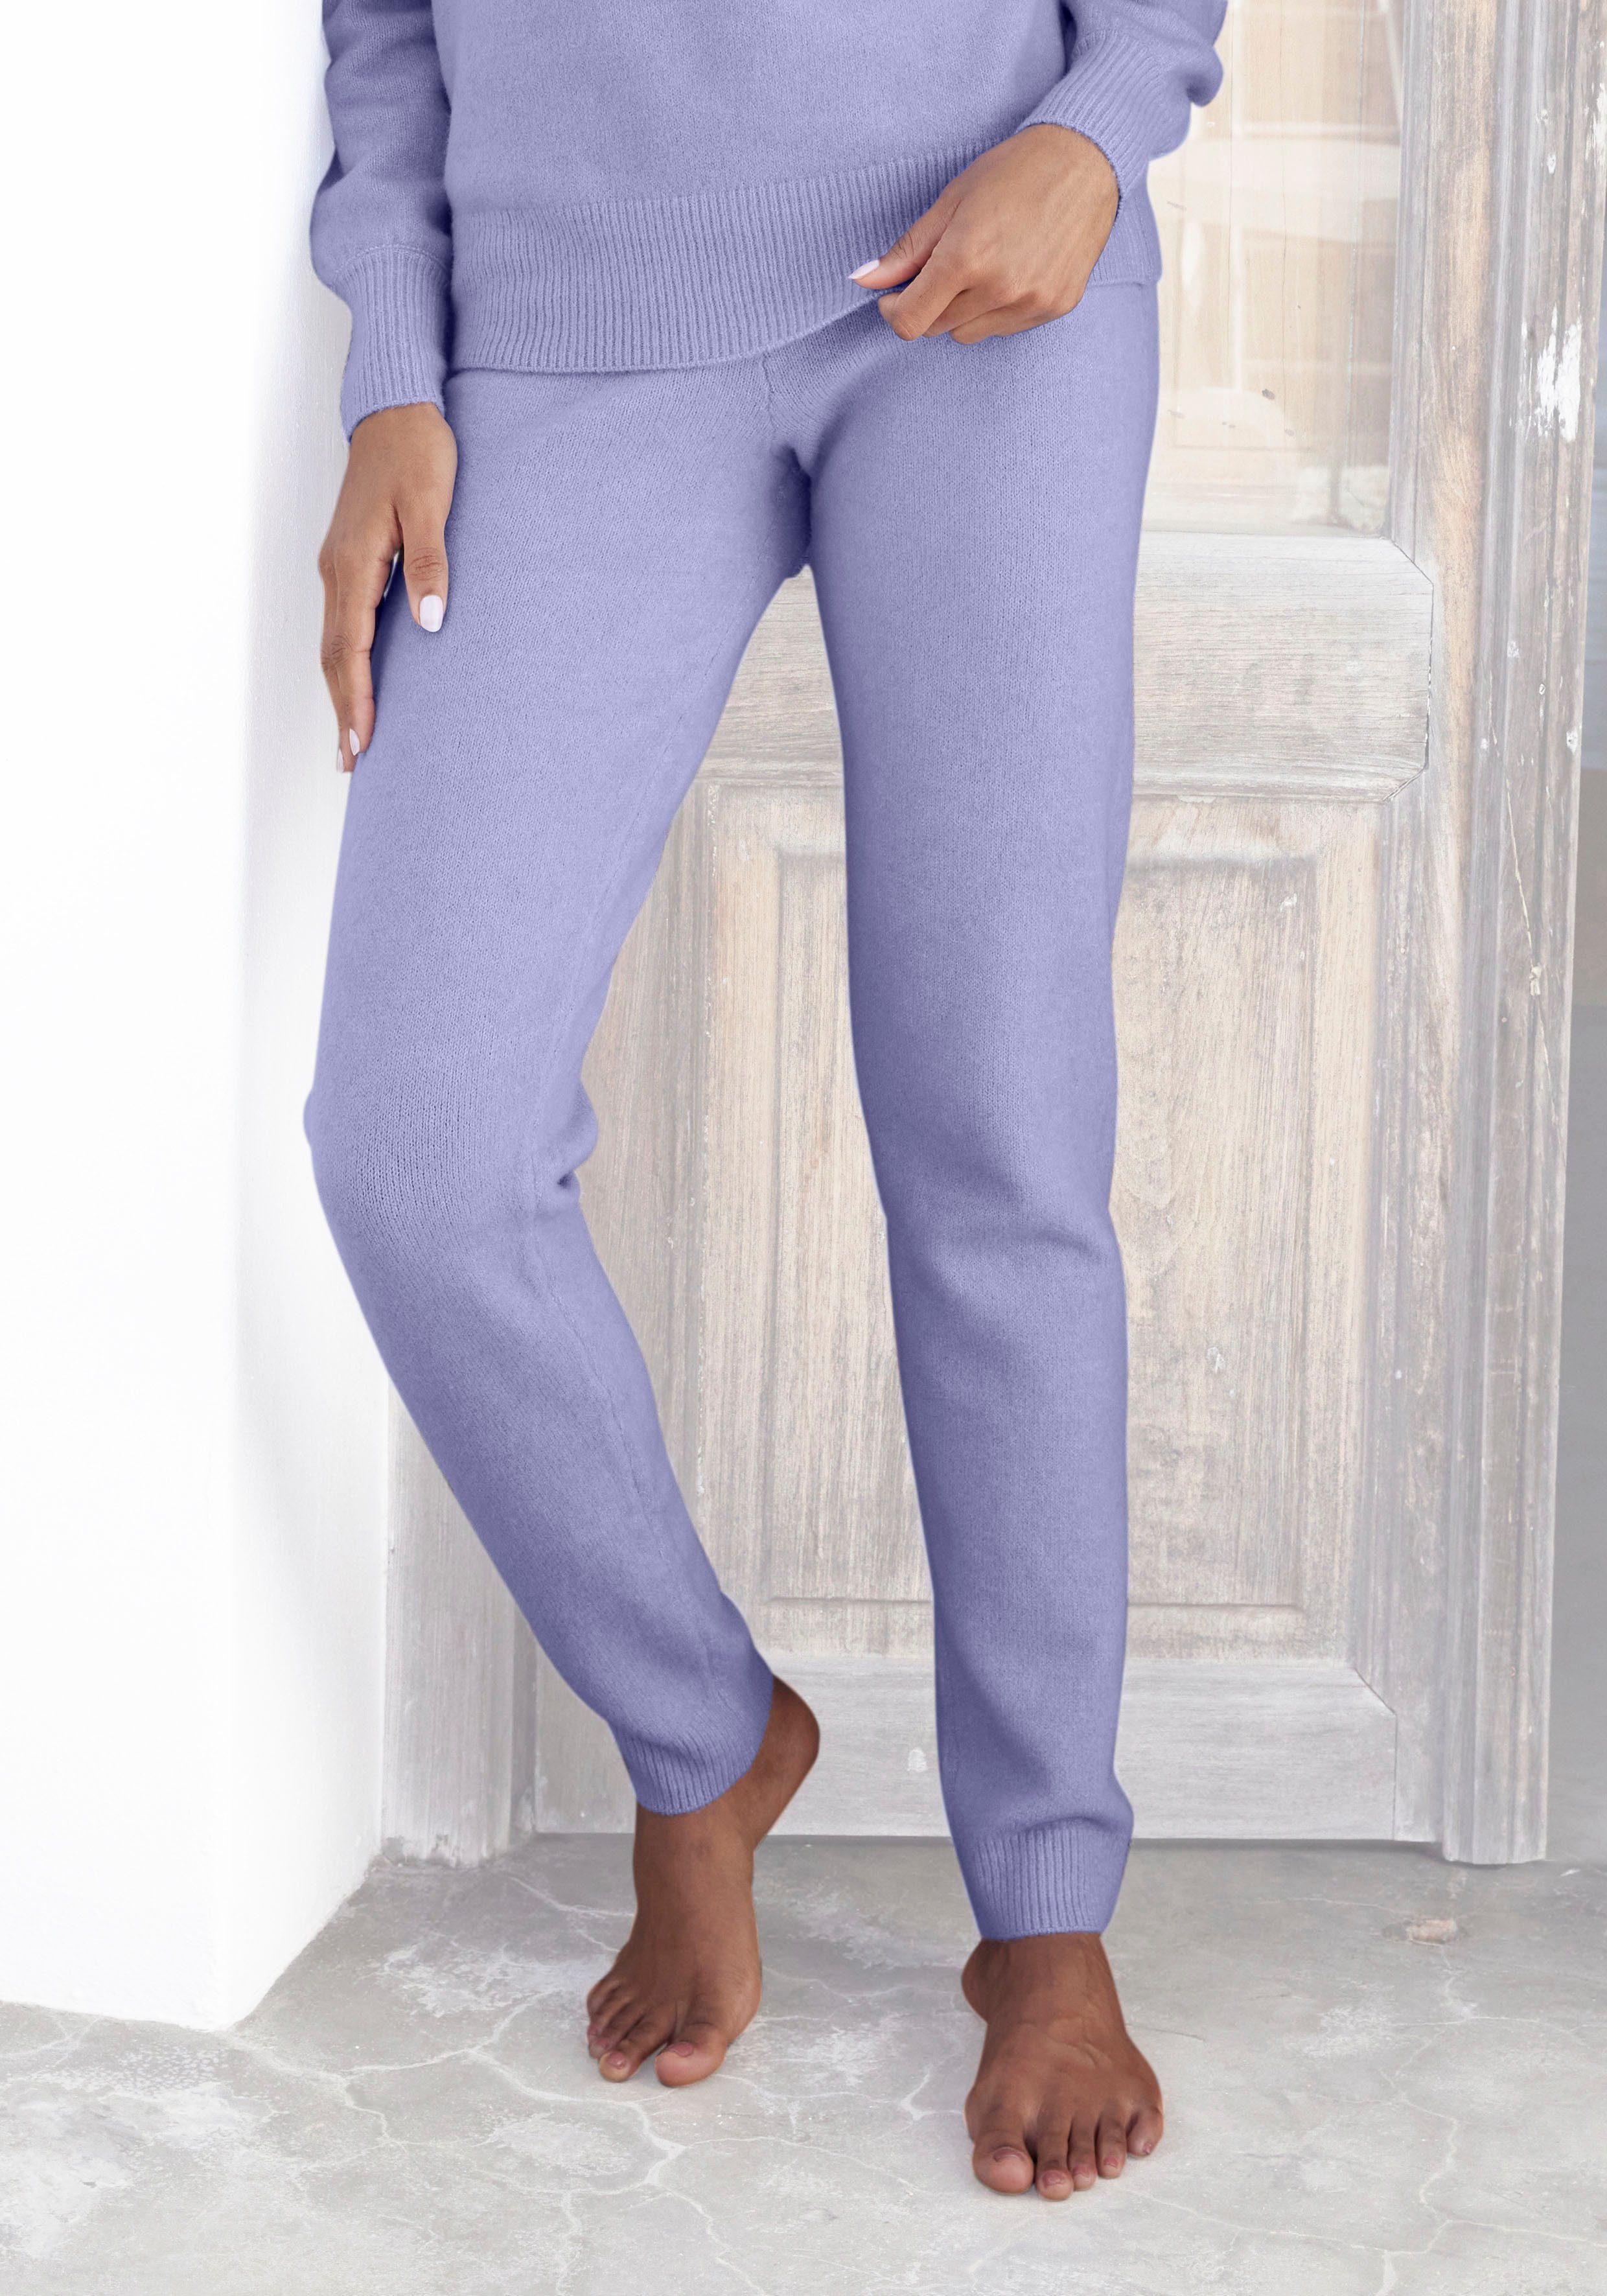 LASCANA Strickhose -Loungehose aus weichem Strick, Loungewear hellblau | Stretchhosen